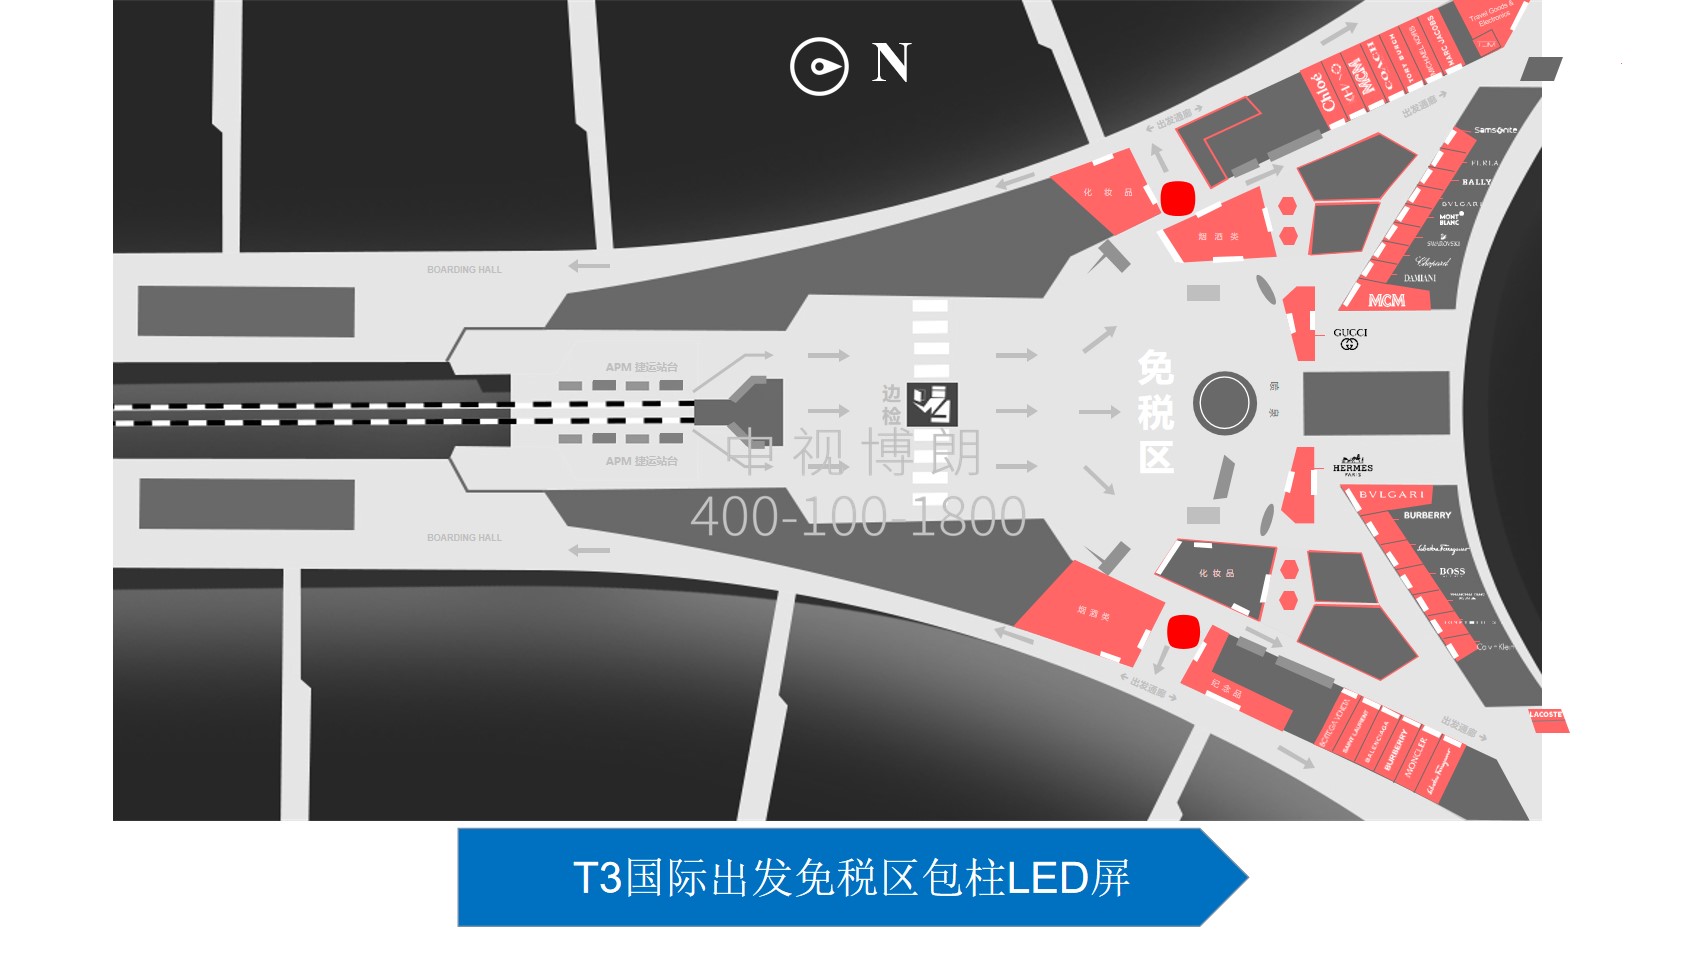 北京首都机场广告-T3 International Departure Duty Free Zone Package Column LED Screen位置图